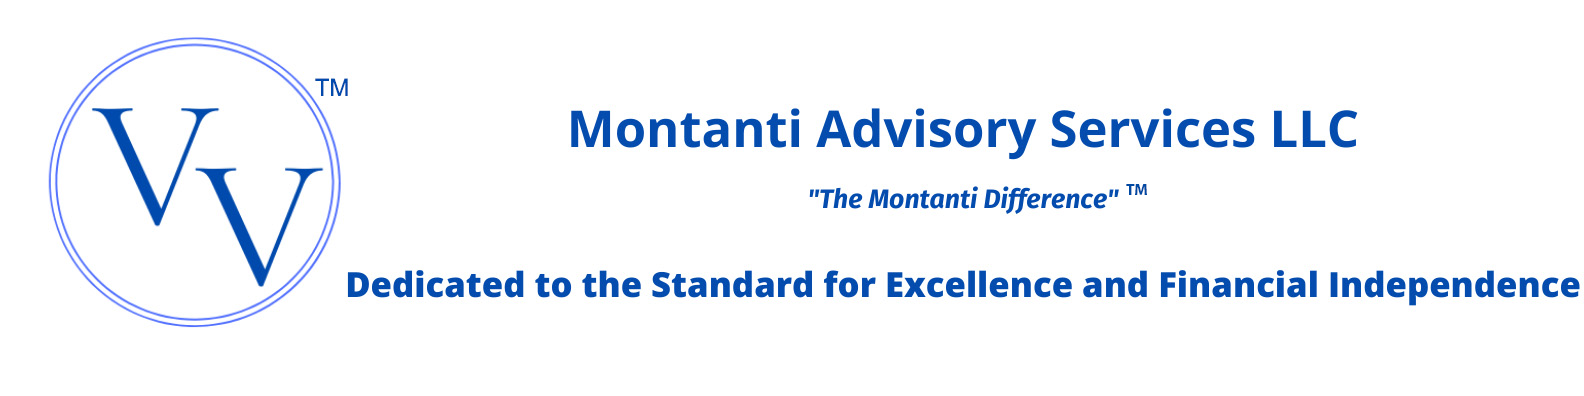 Montanti Advisory Services, LLC